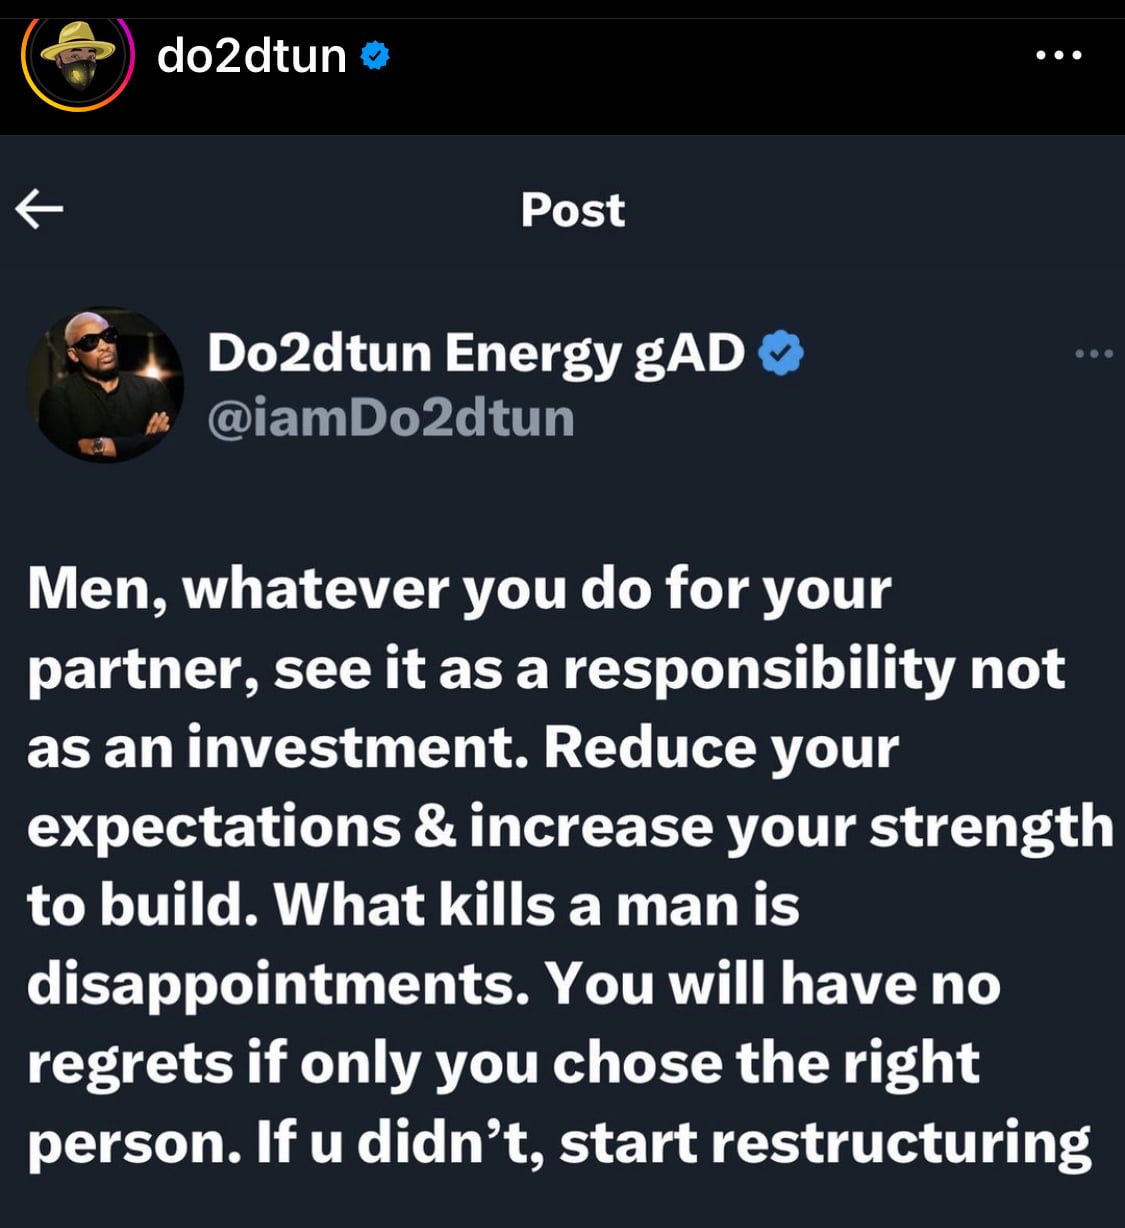 Do2dtun shares tips on self-care for men.